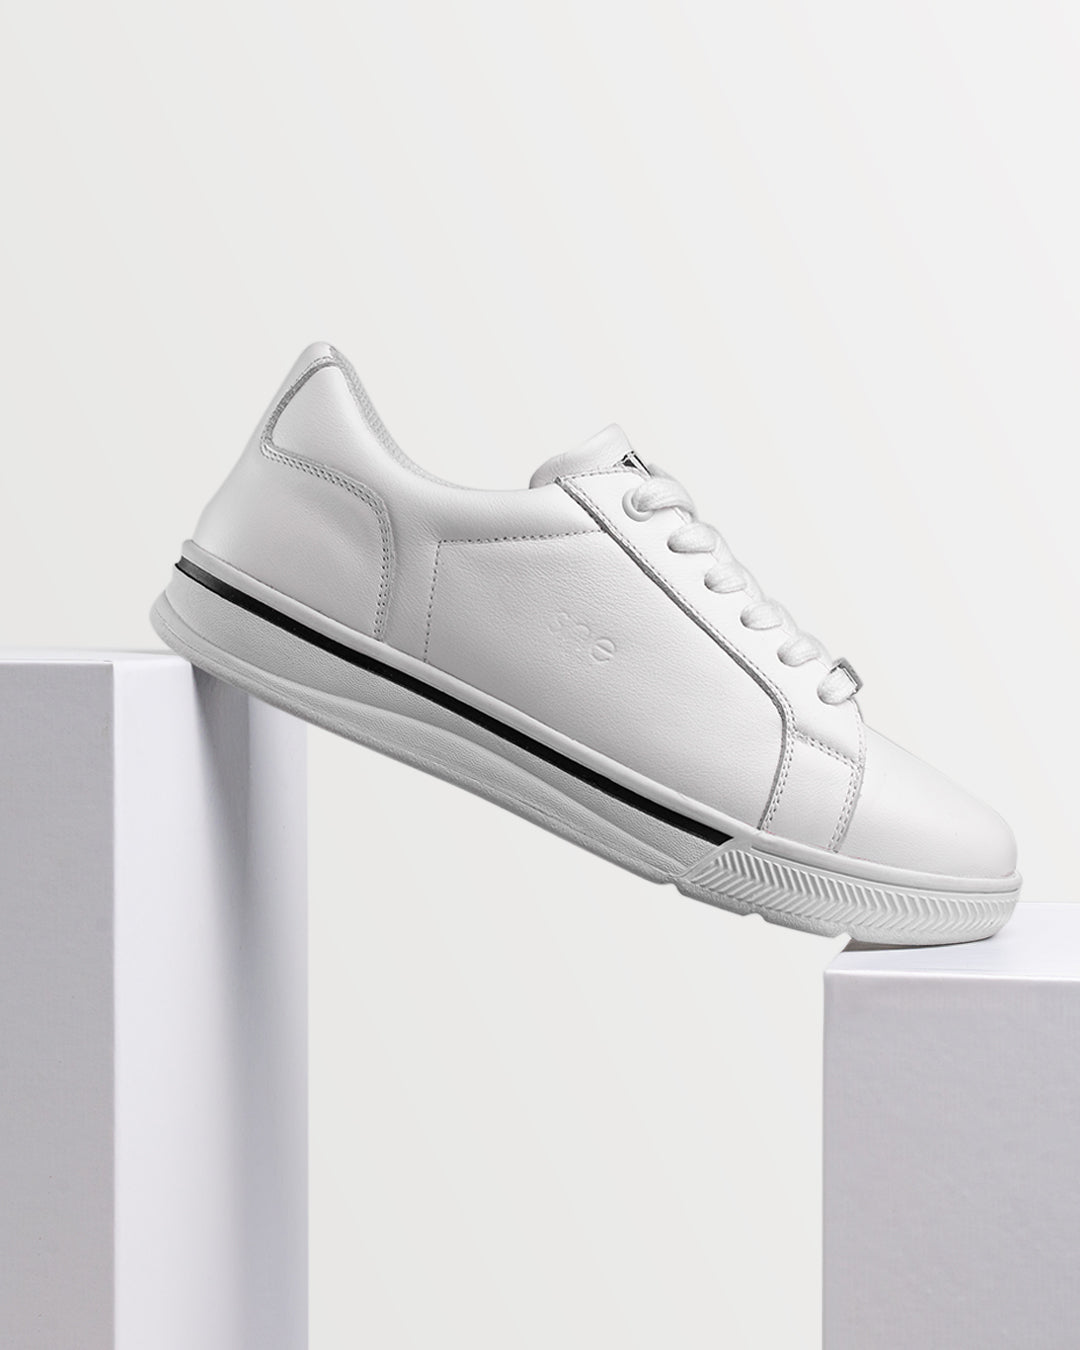 white stylish women's sneakers